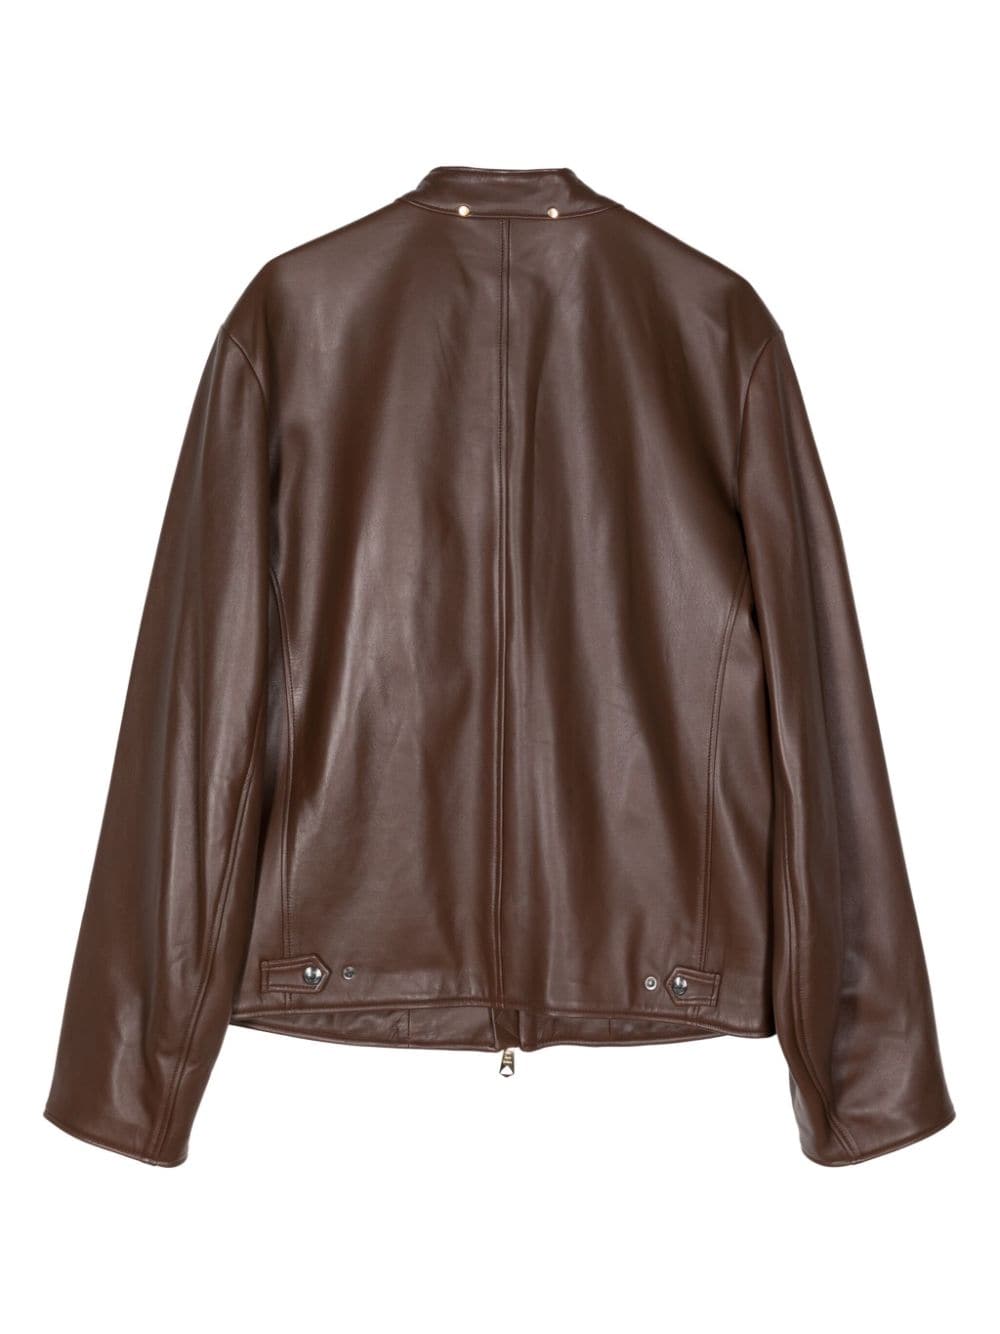 Paul Smith zip-up leather jacket - Bruin